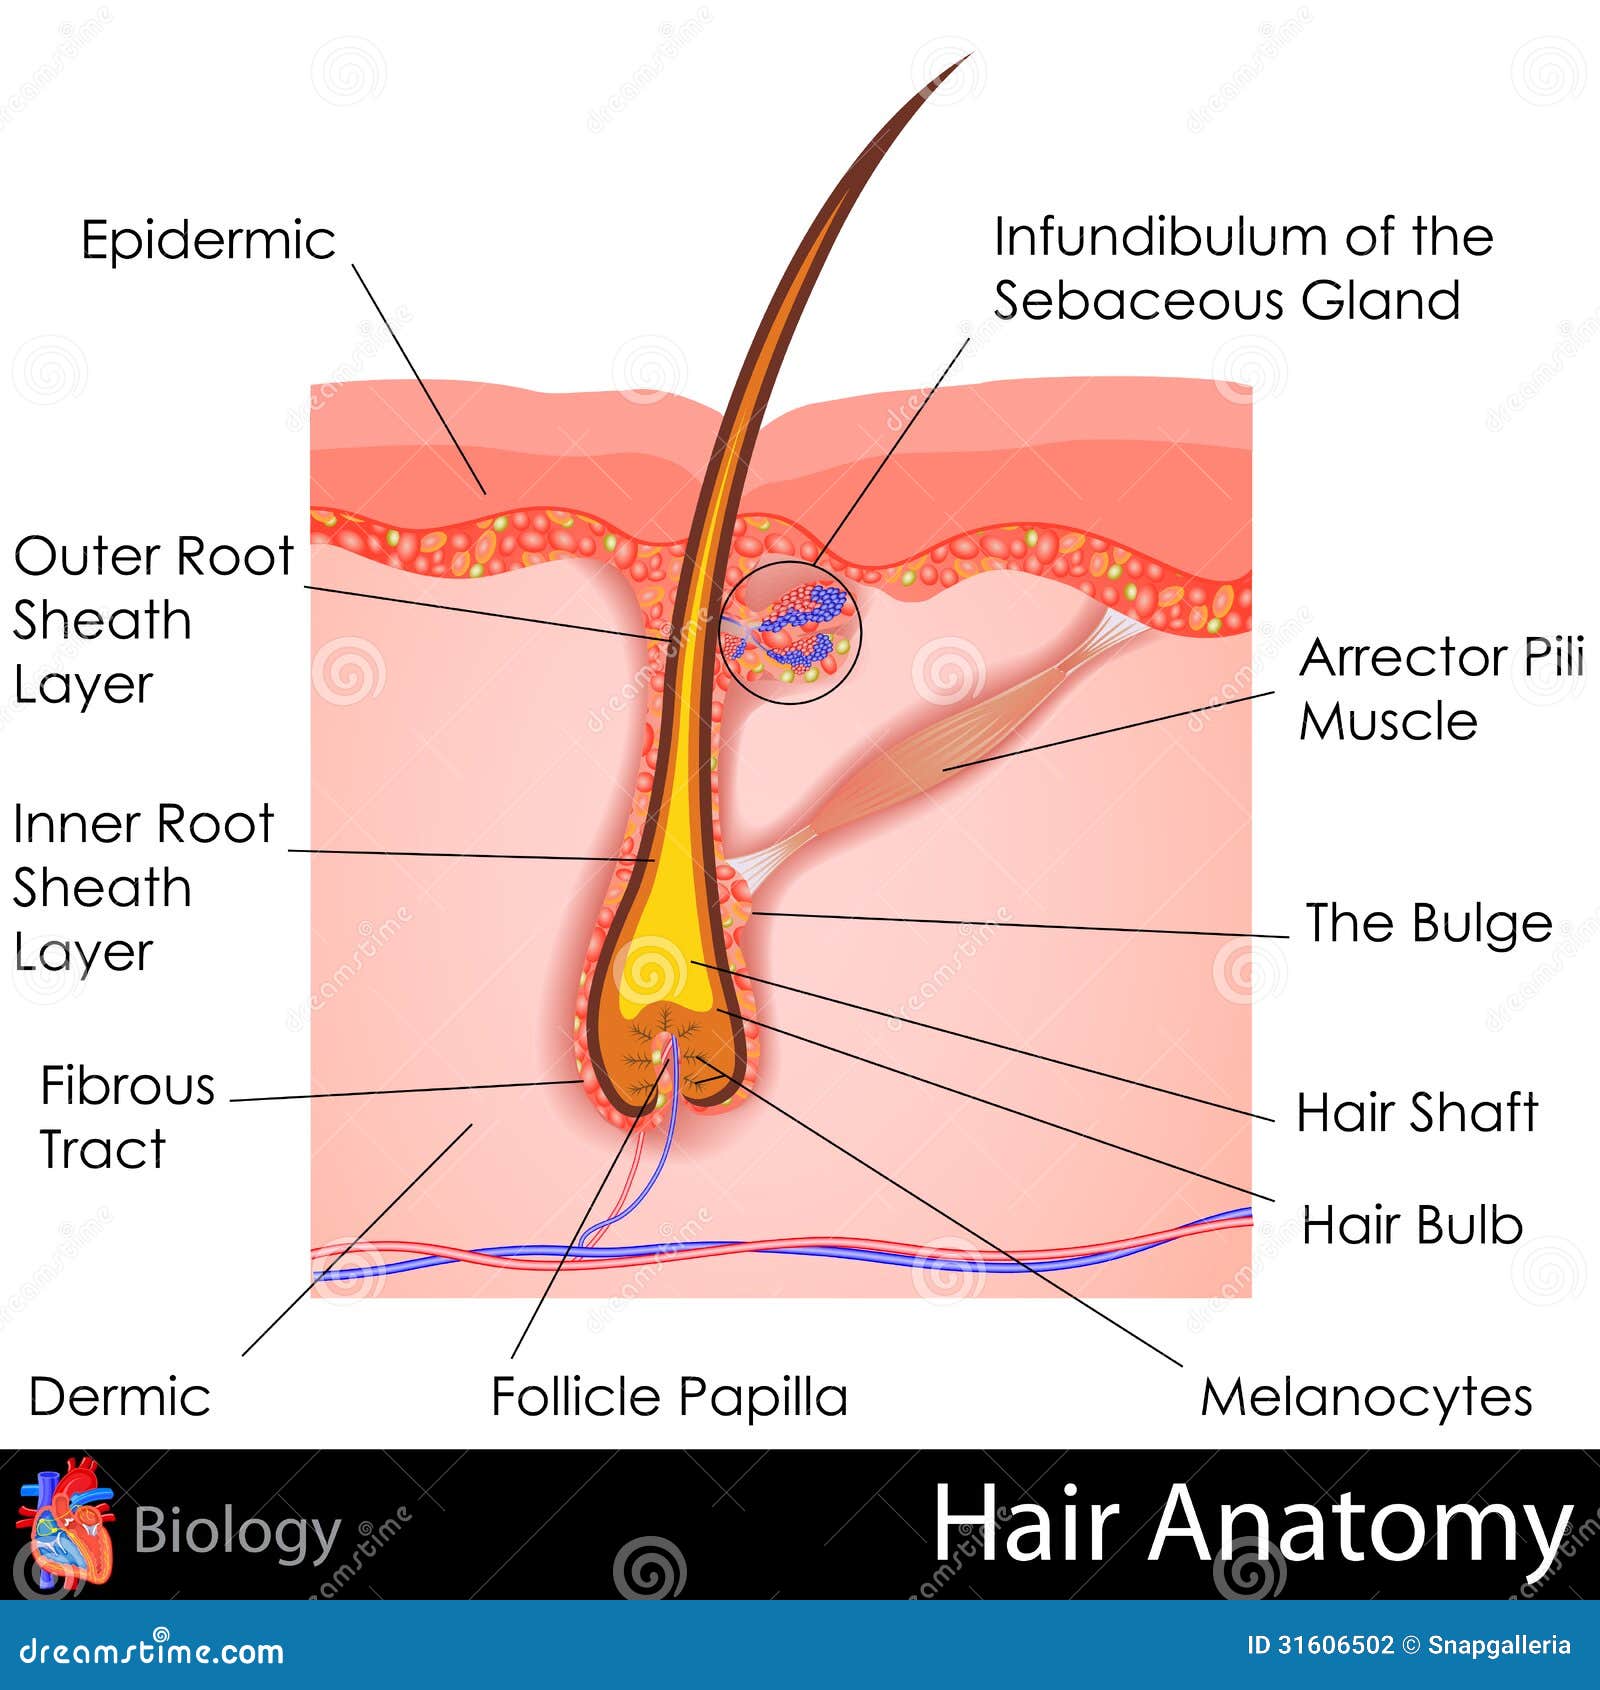 Hair Anatomy stock vector. Illustration of epidermic - 31606502